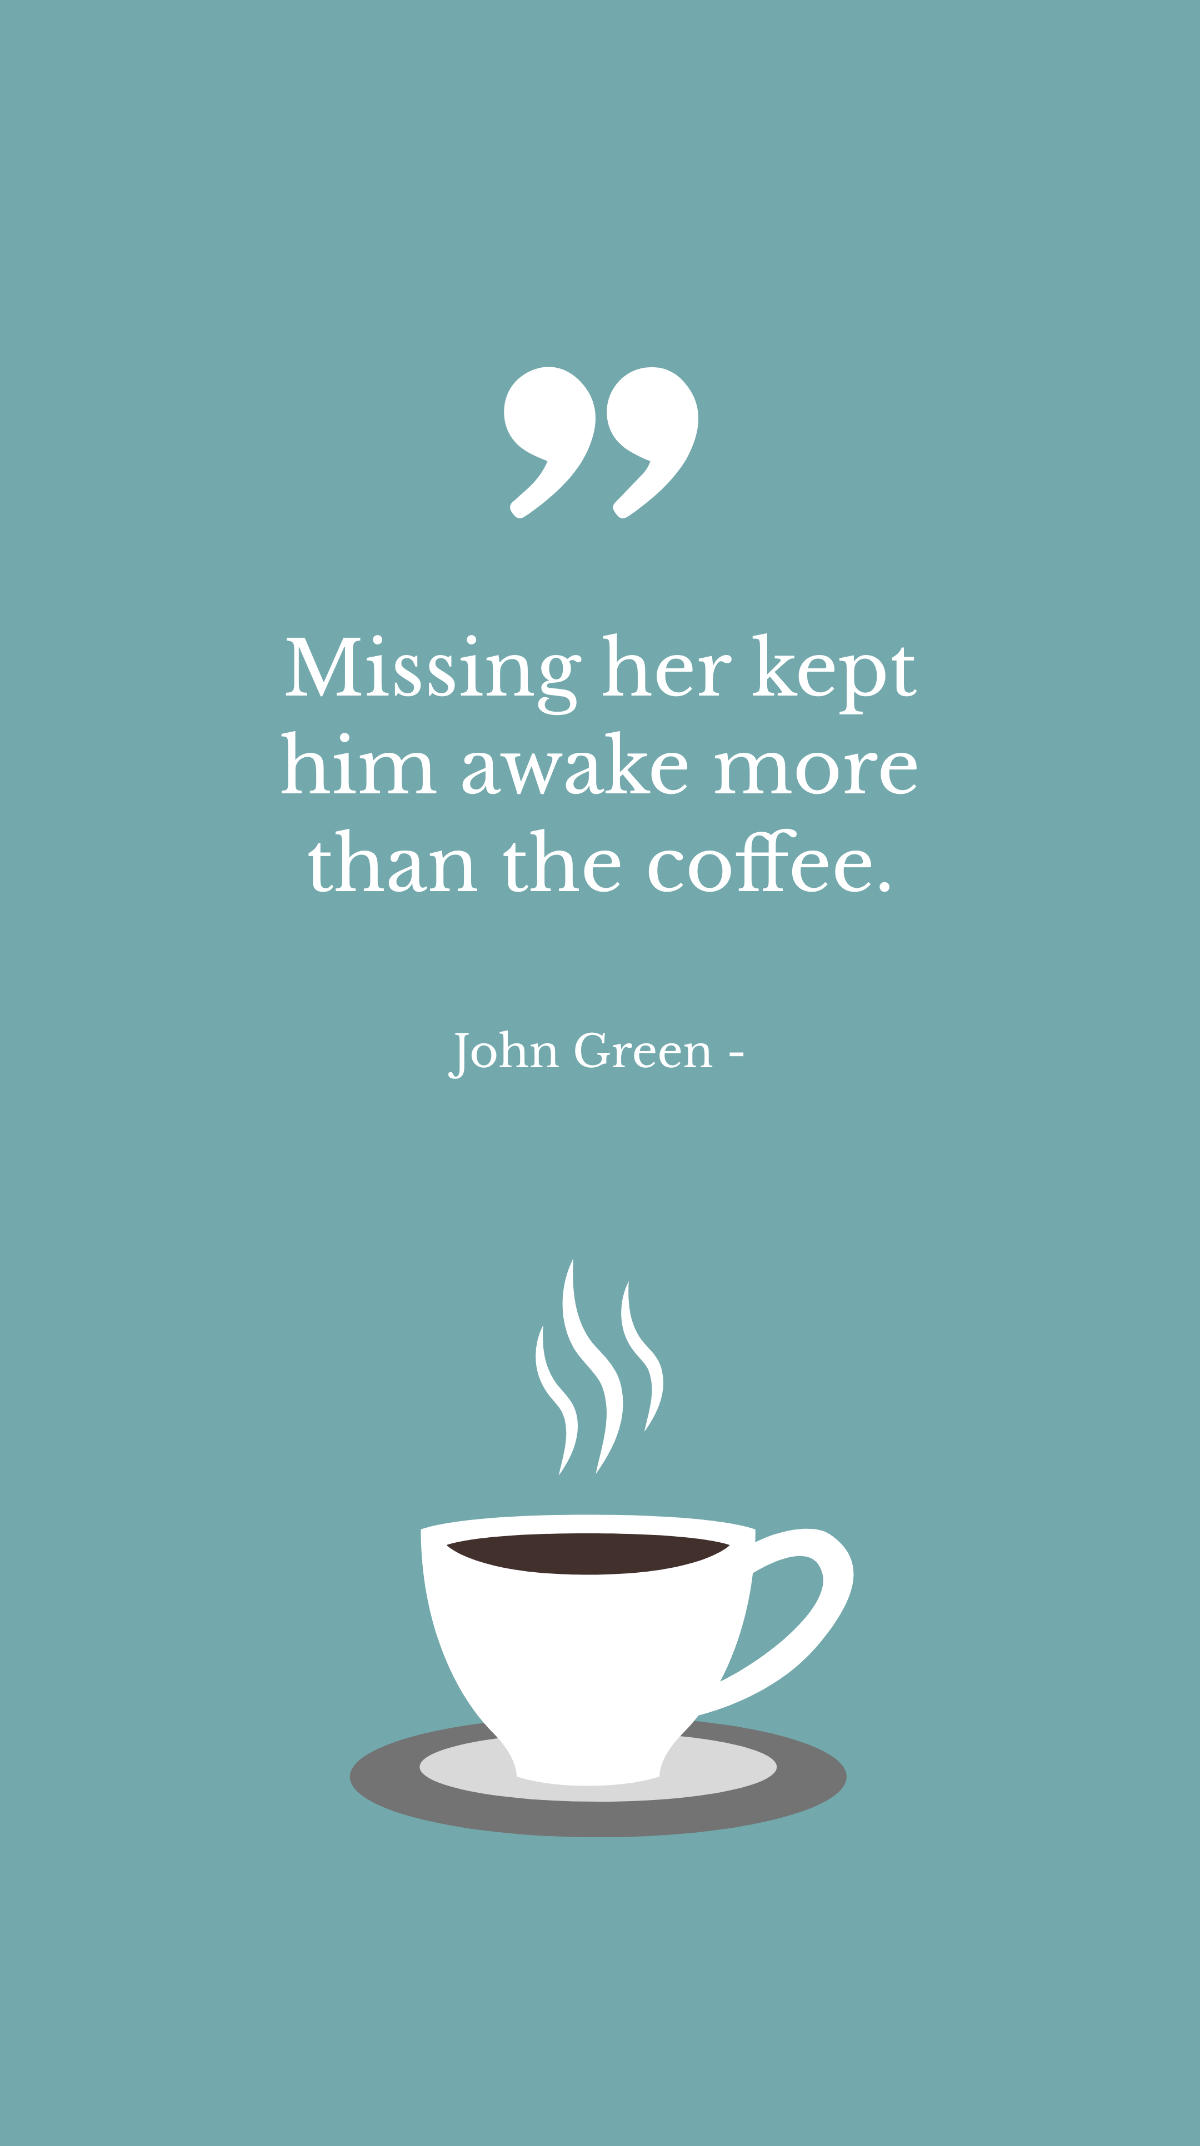 John Green - Missing her kept him awake more than the coffee. Template